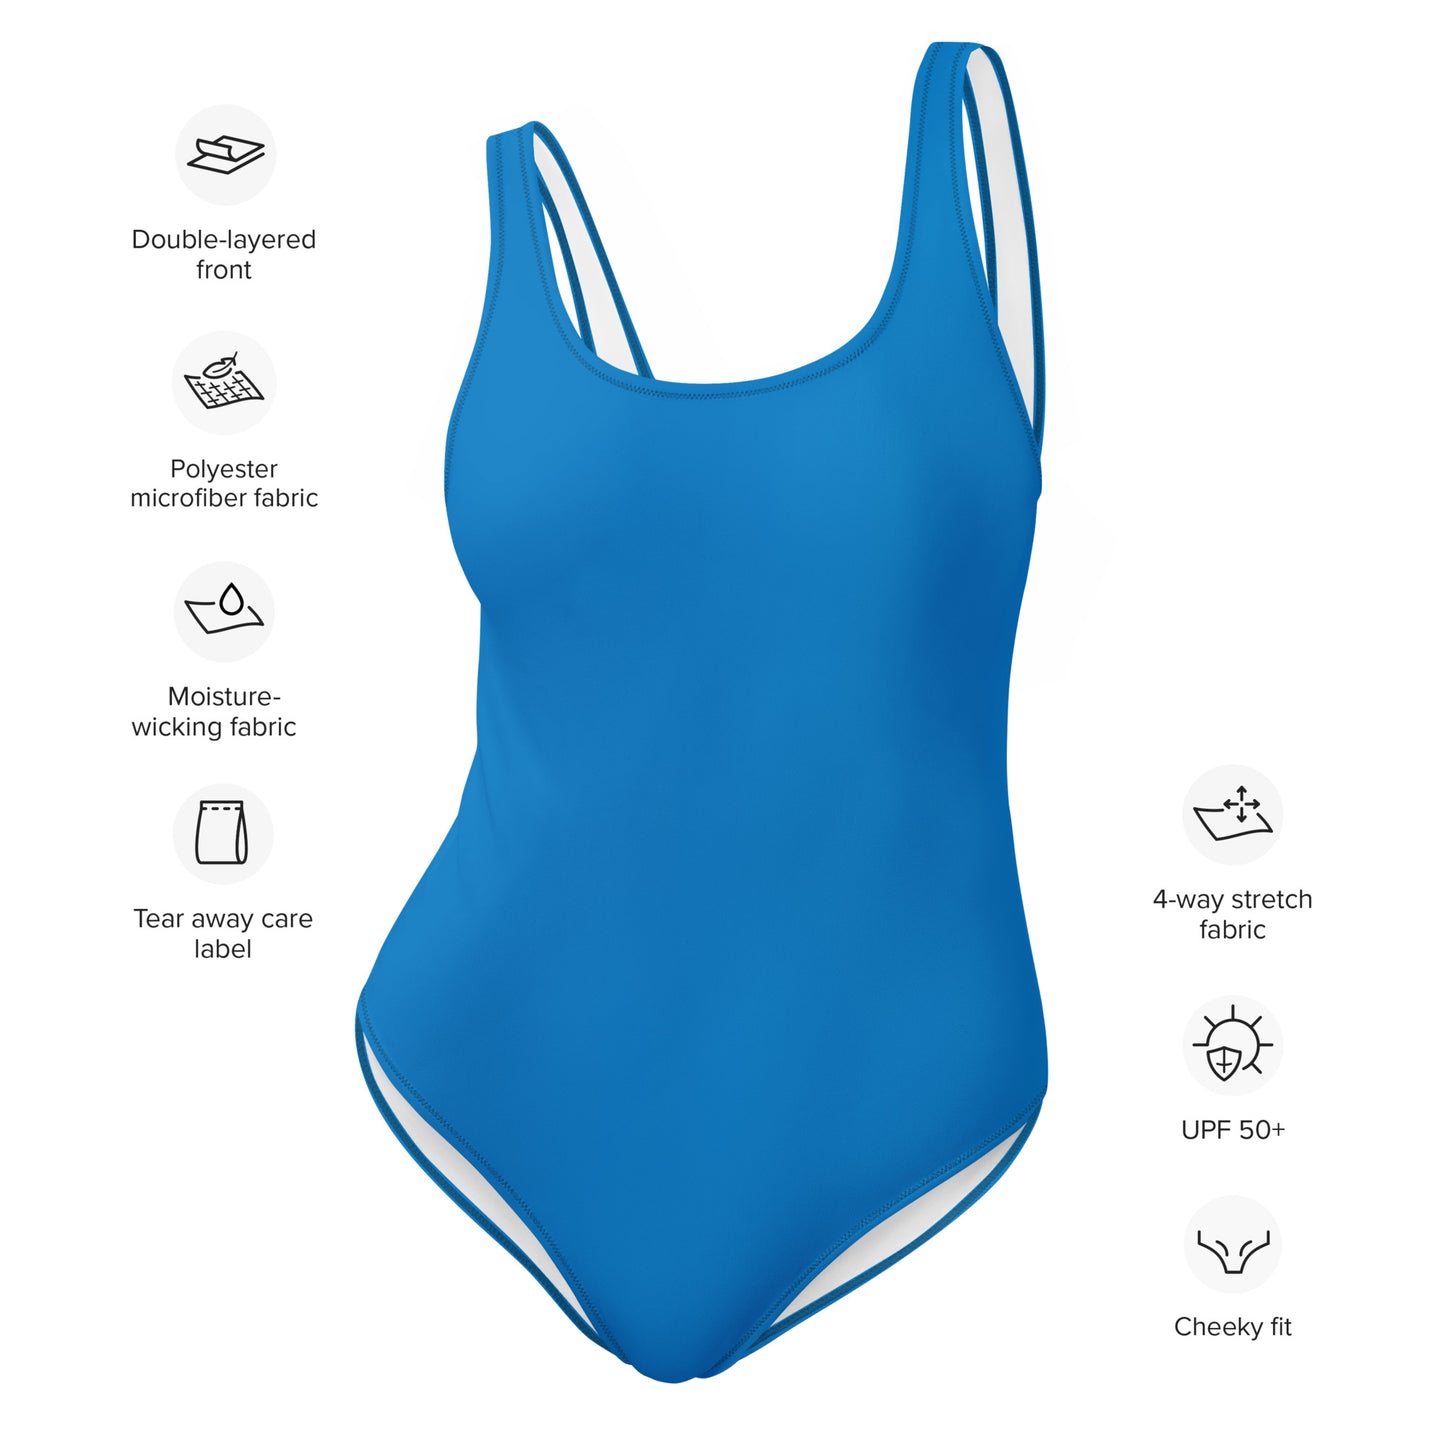 Summer Essentials Ladies Blue One Piece Swimsuit by Bahawear™